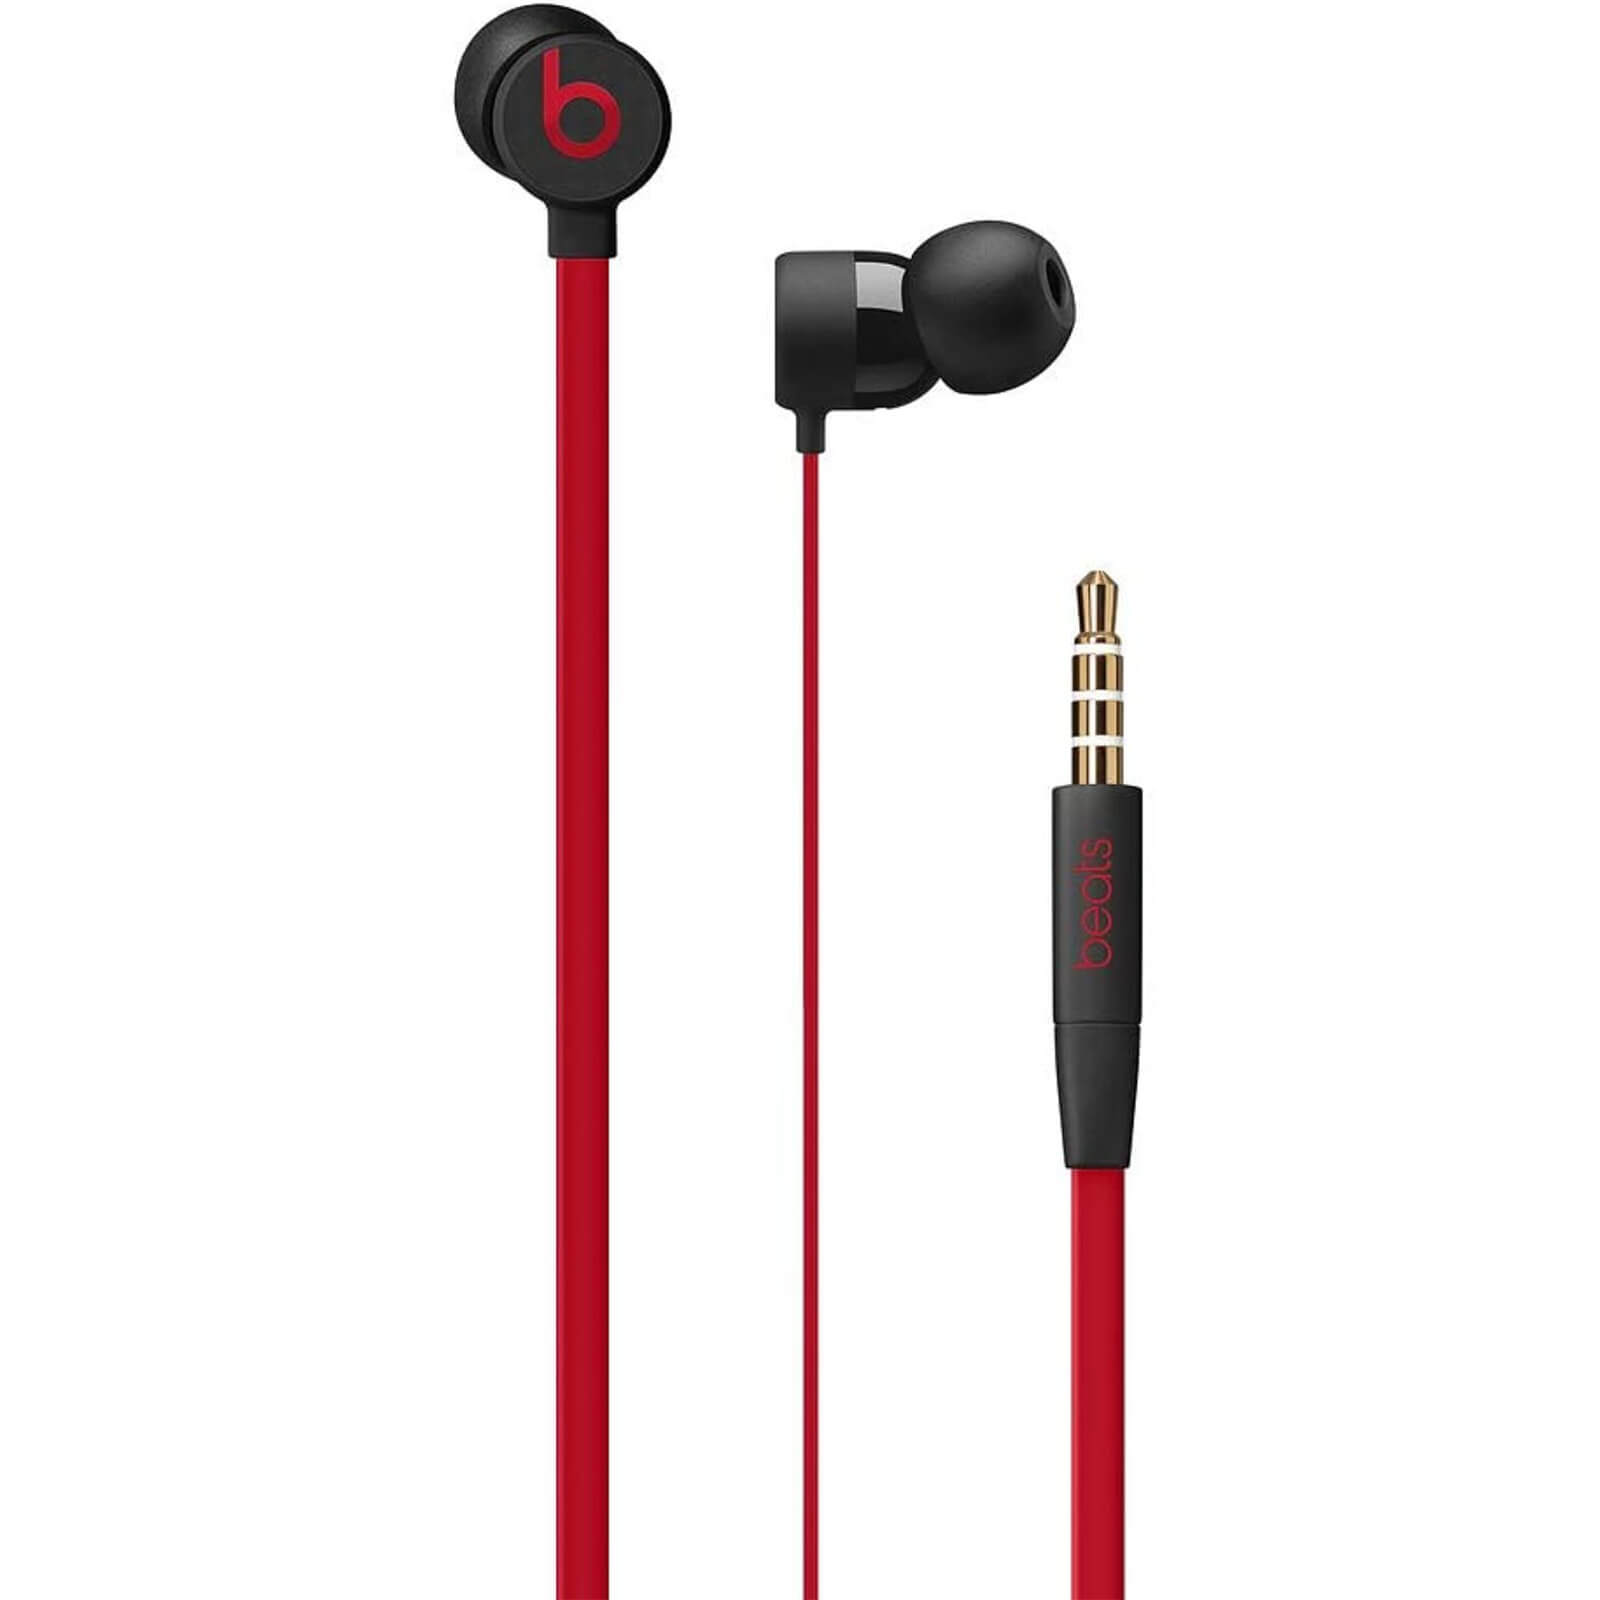 Beats urBeats3 Earphones with 3.5mm Plug - Defiant Black/Red